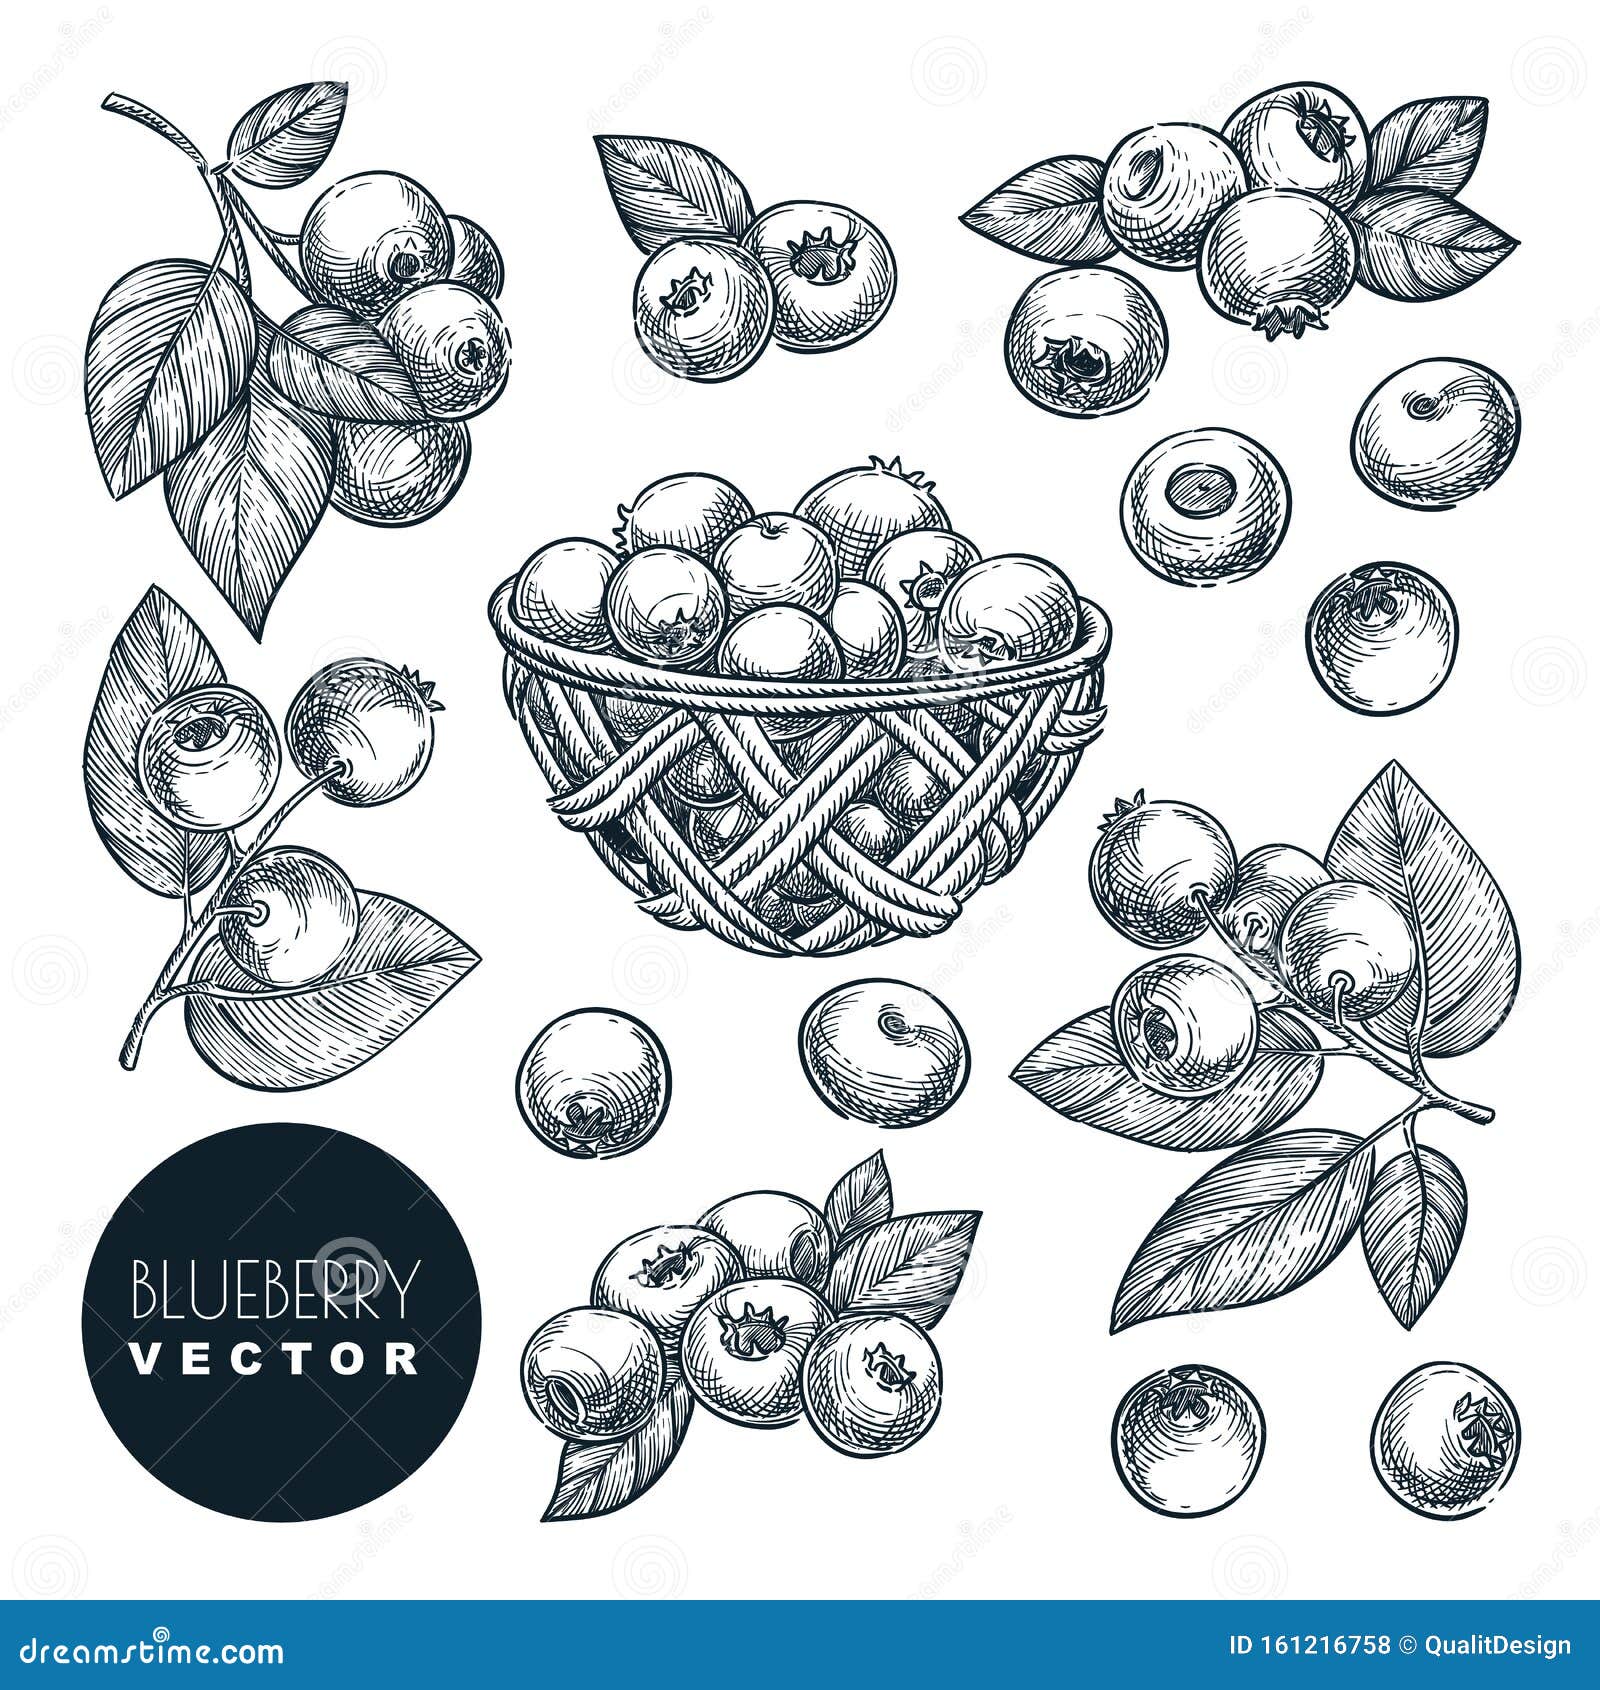 Blueberry Drawing Images  Free Download on Freepik